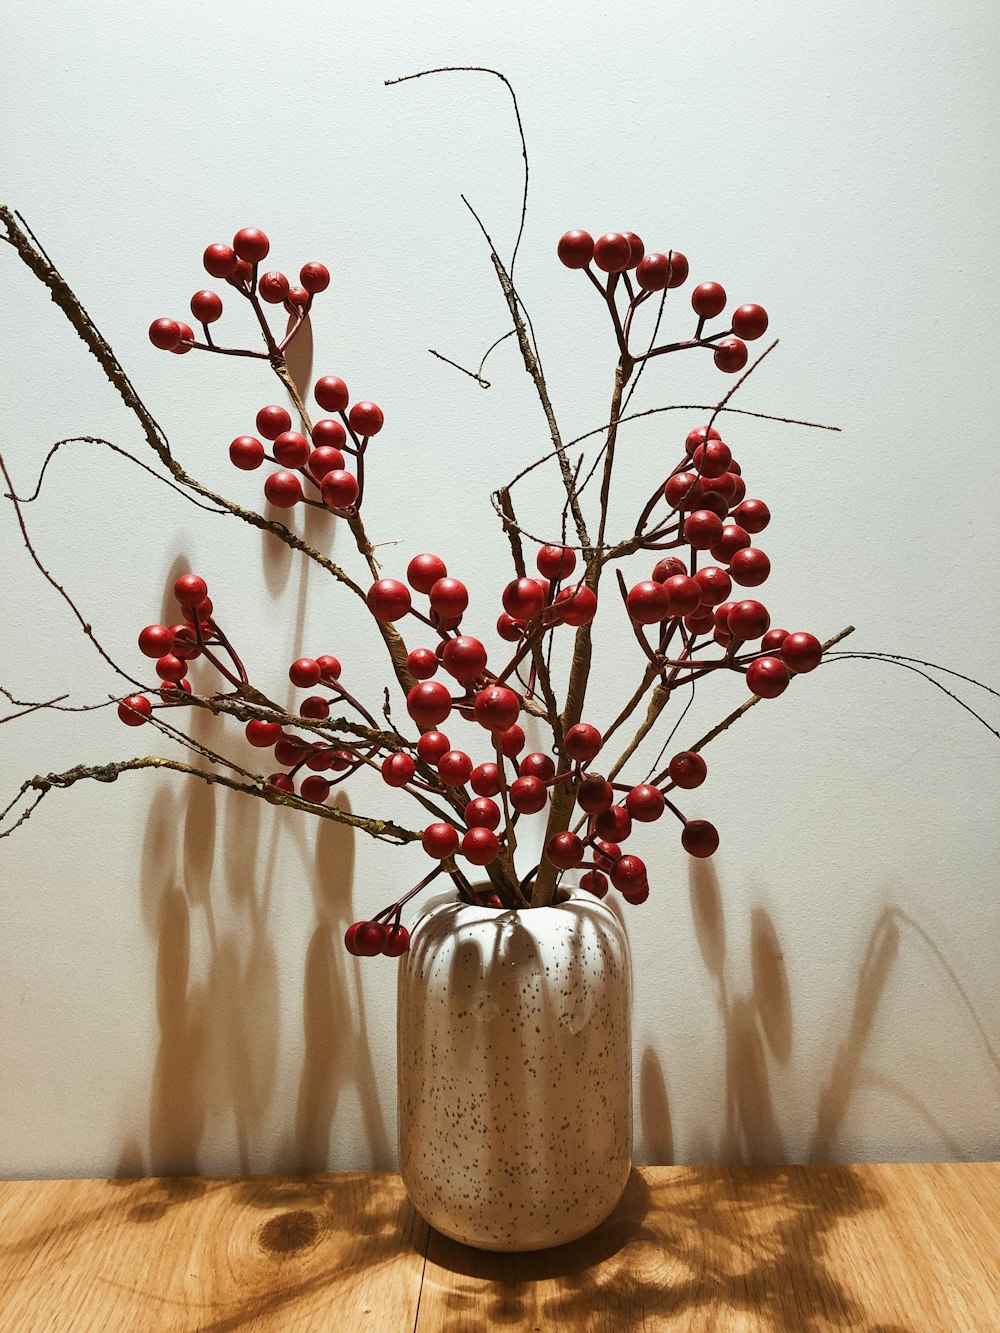 red fruits in vase